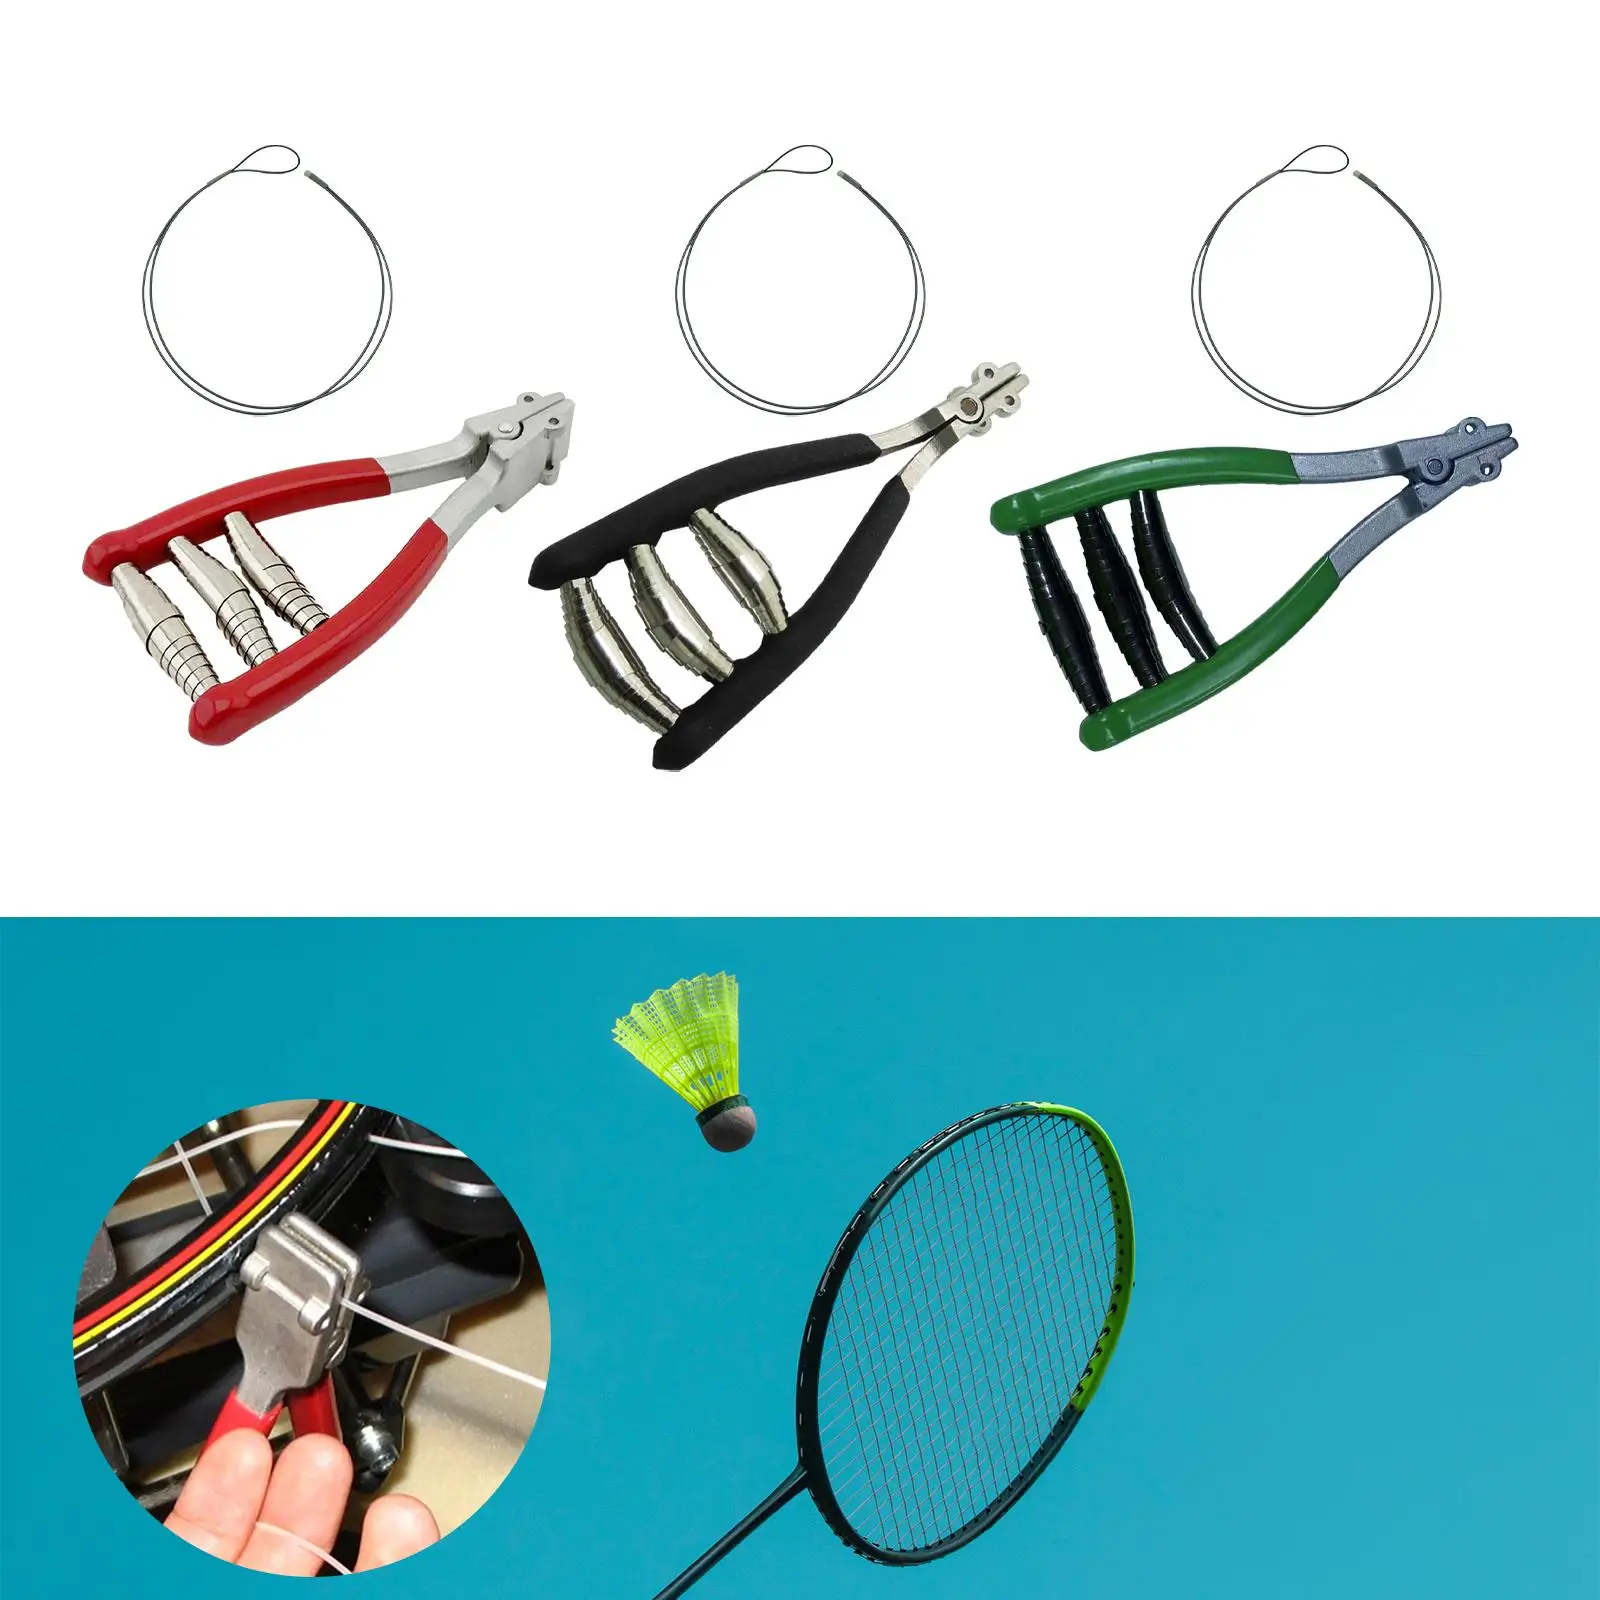 Starting Clamp Stringing Clamp Manual 3 Spring Tennis Equipment Stringing Tool for Tennis Racquet Badminton Squash Accessories